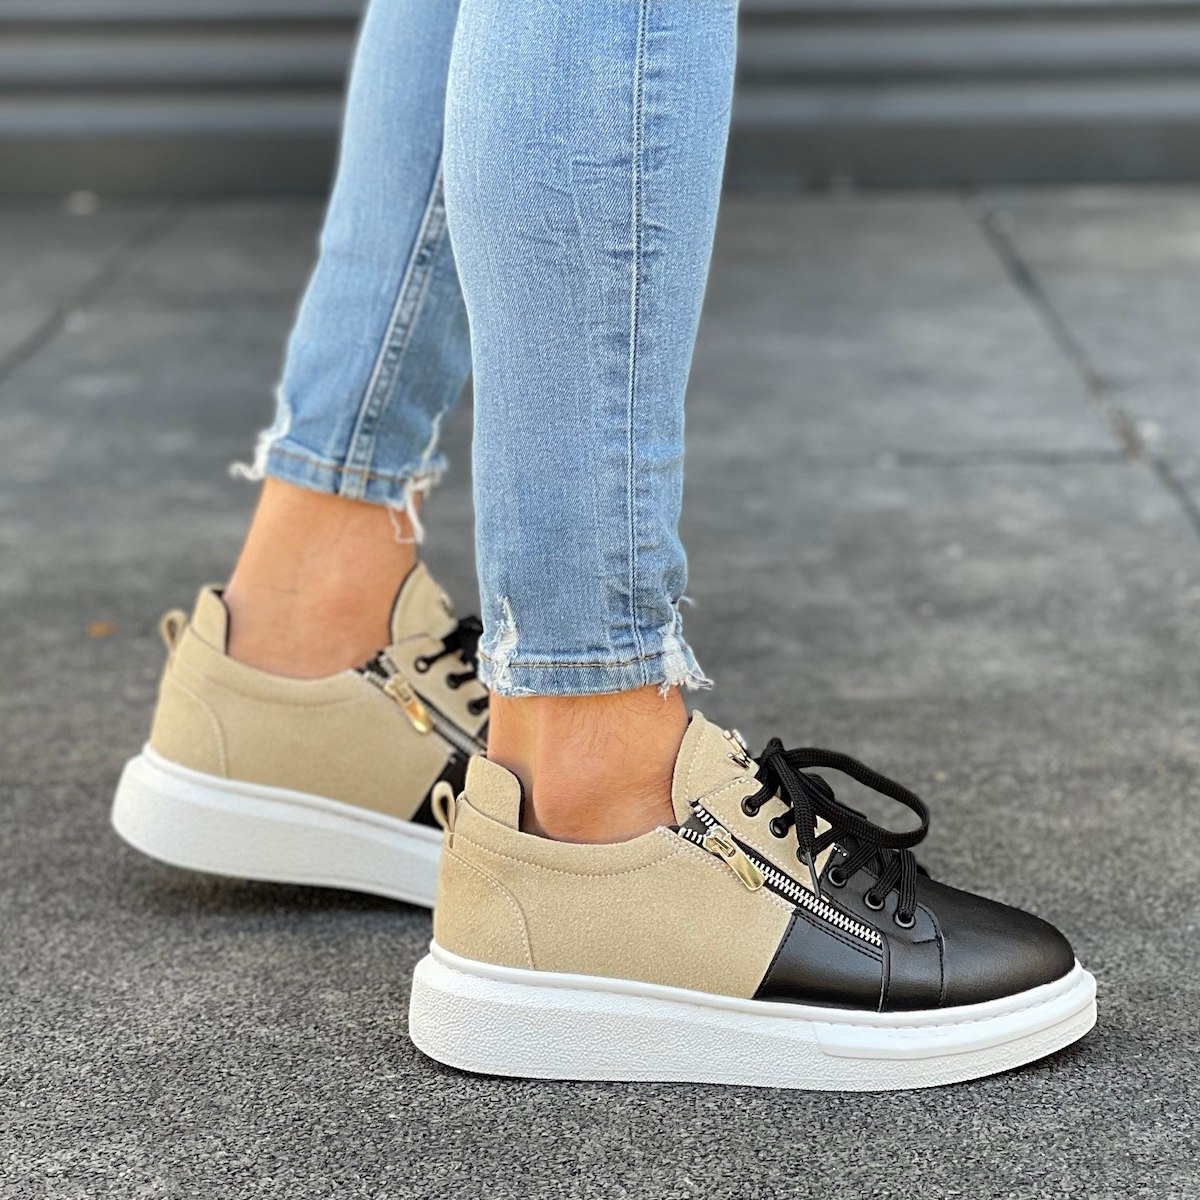 Hype Sole Zipped Style Sneakers in Cream-Black | Martin Valen